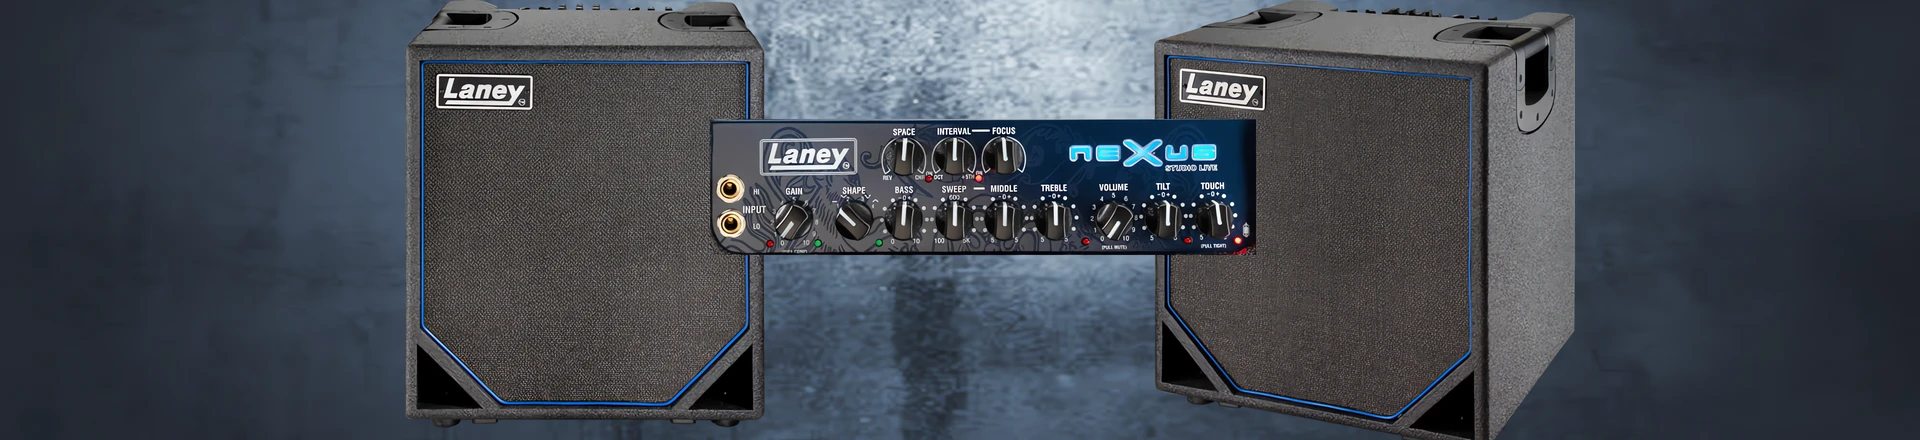 Laney NEXUS SLS-112 - kompaktowe combo o dużej mocy